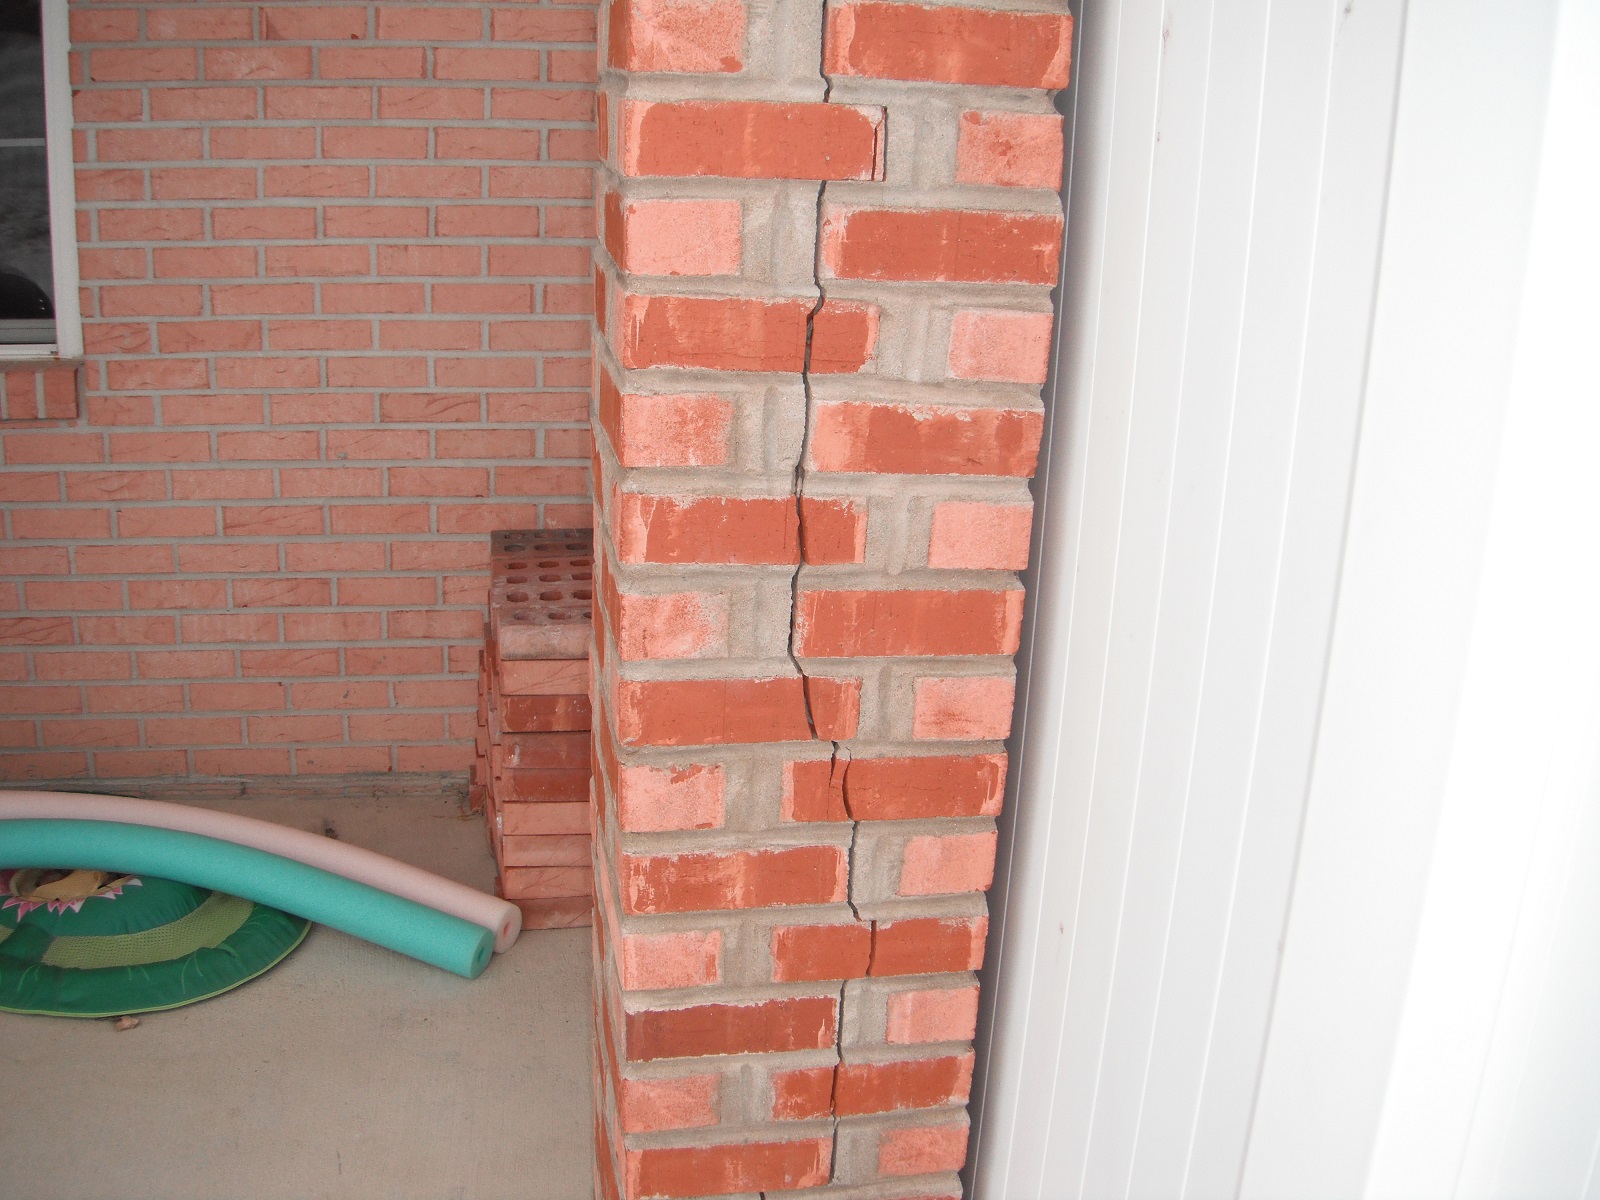 Major cracks on a brick column. "Mokena Home Inspection"